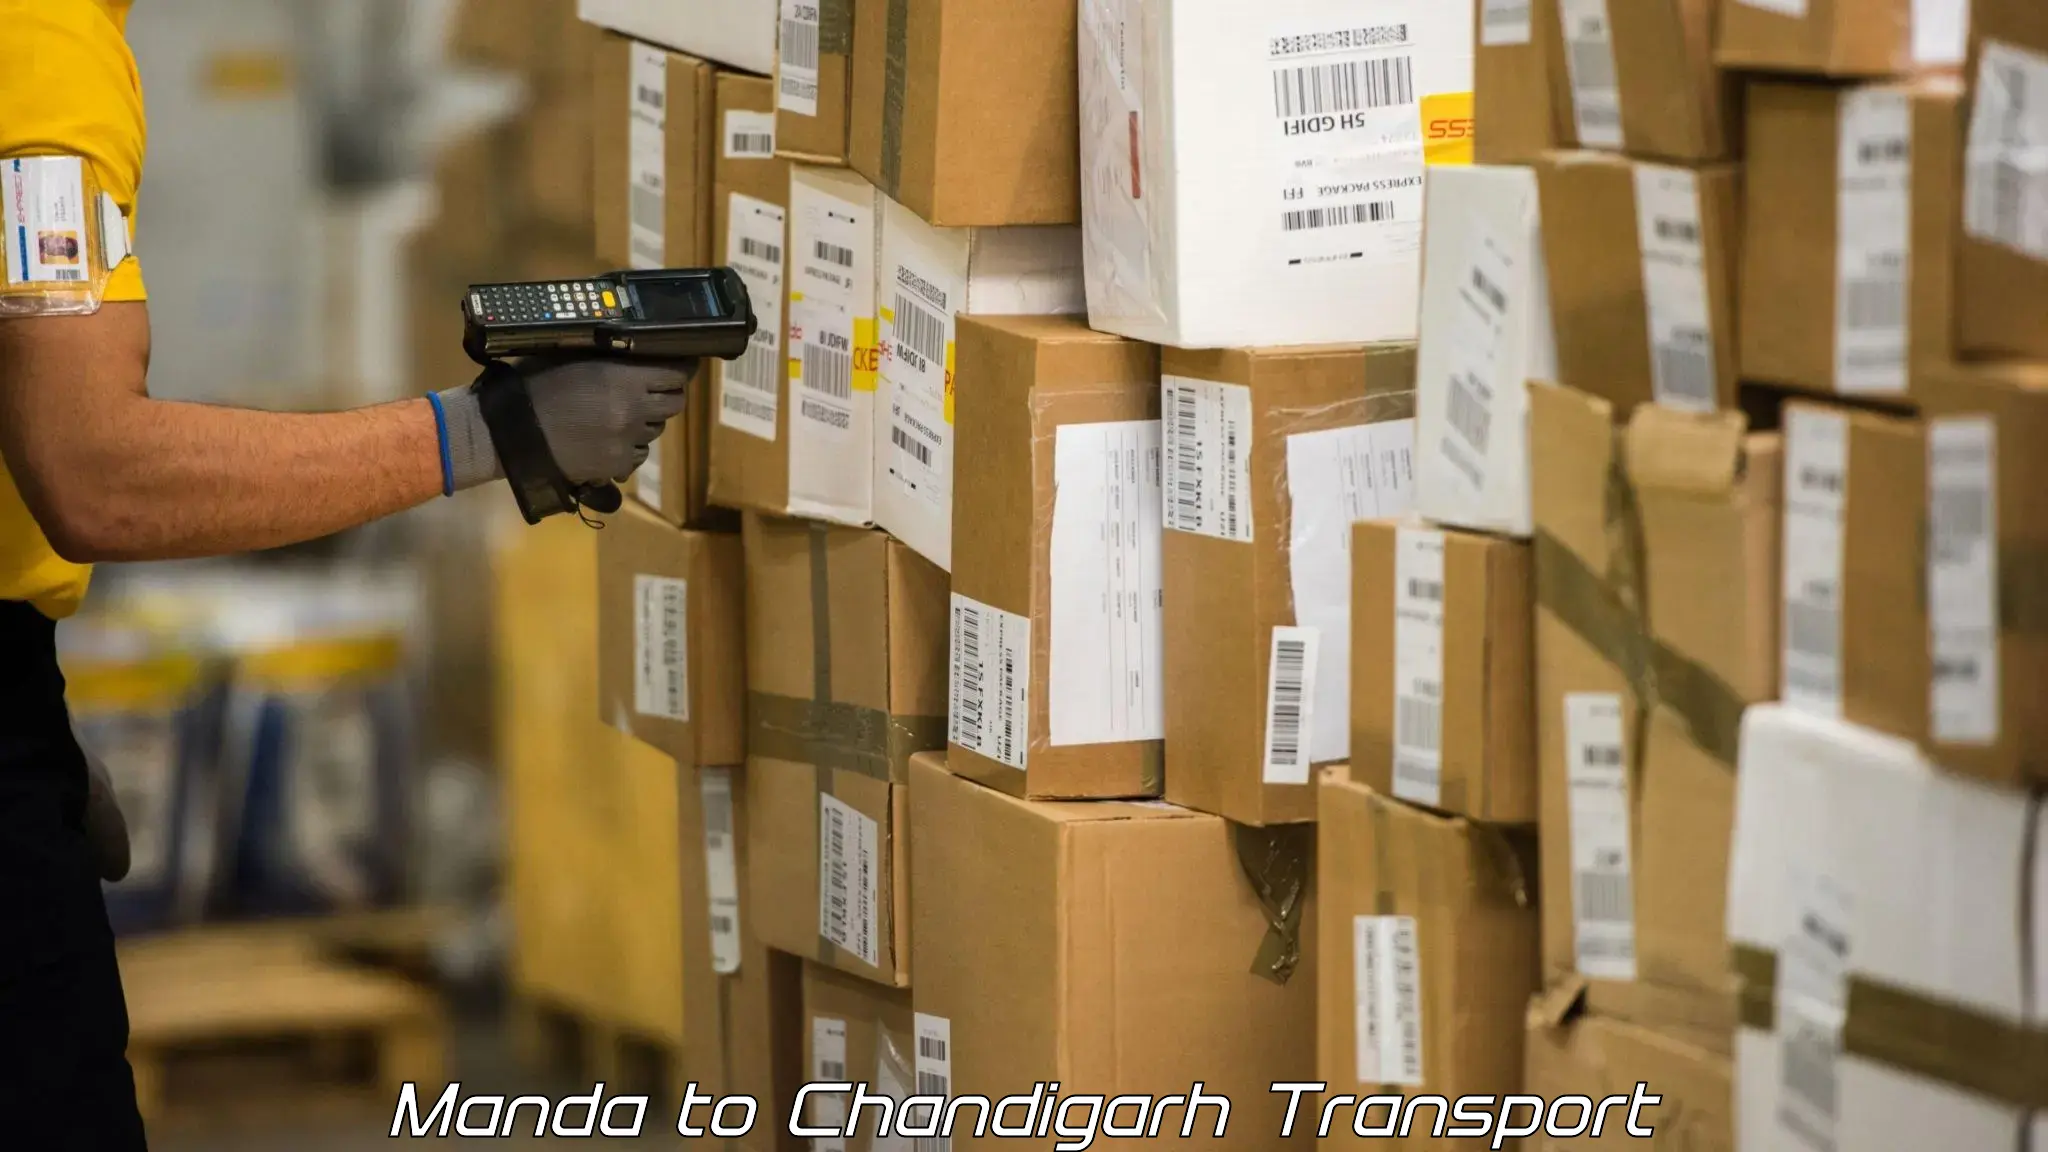 Transport in sharing Manda to Chandigarh